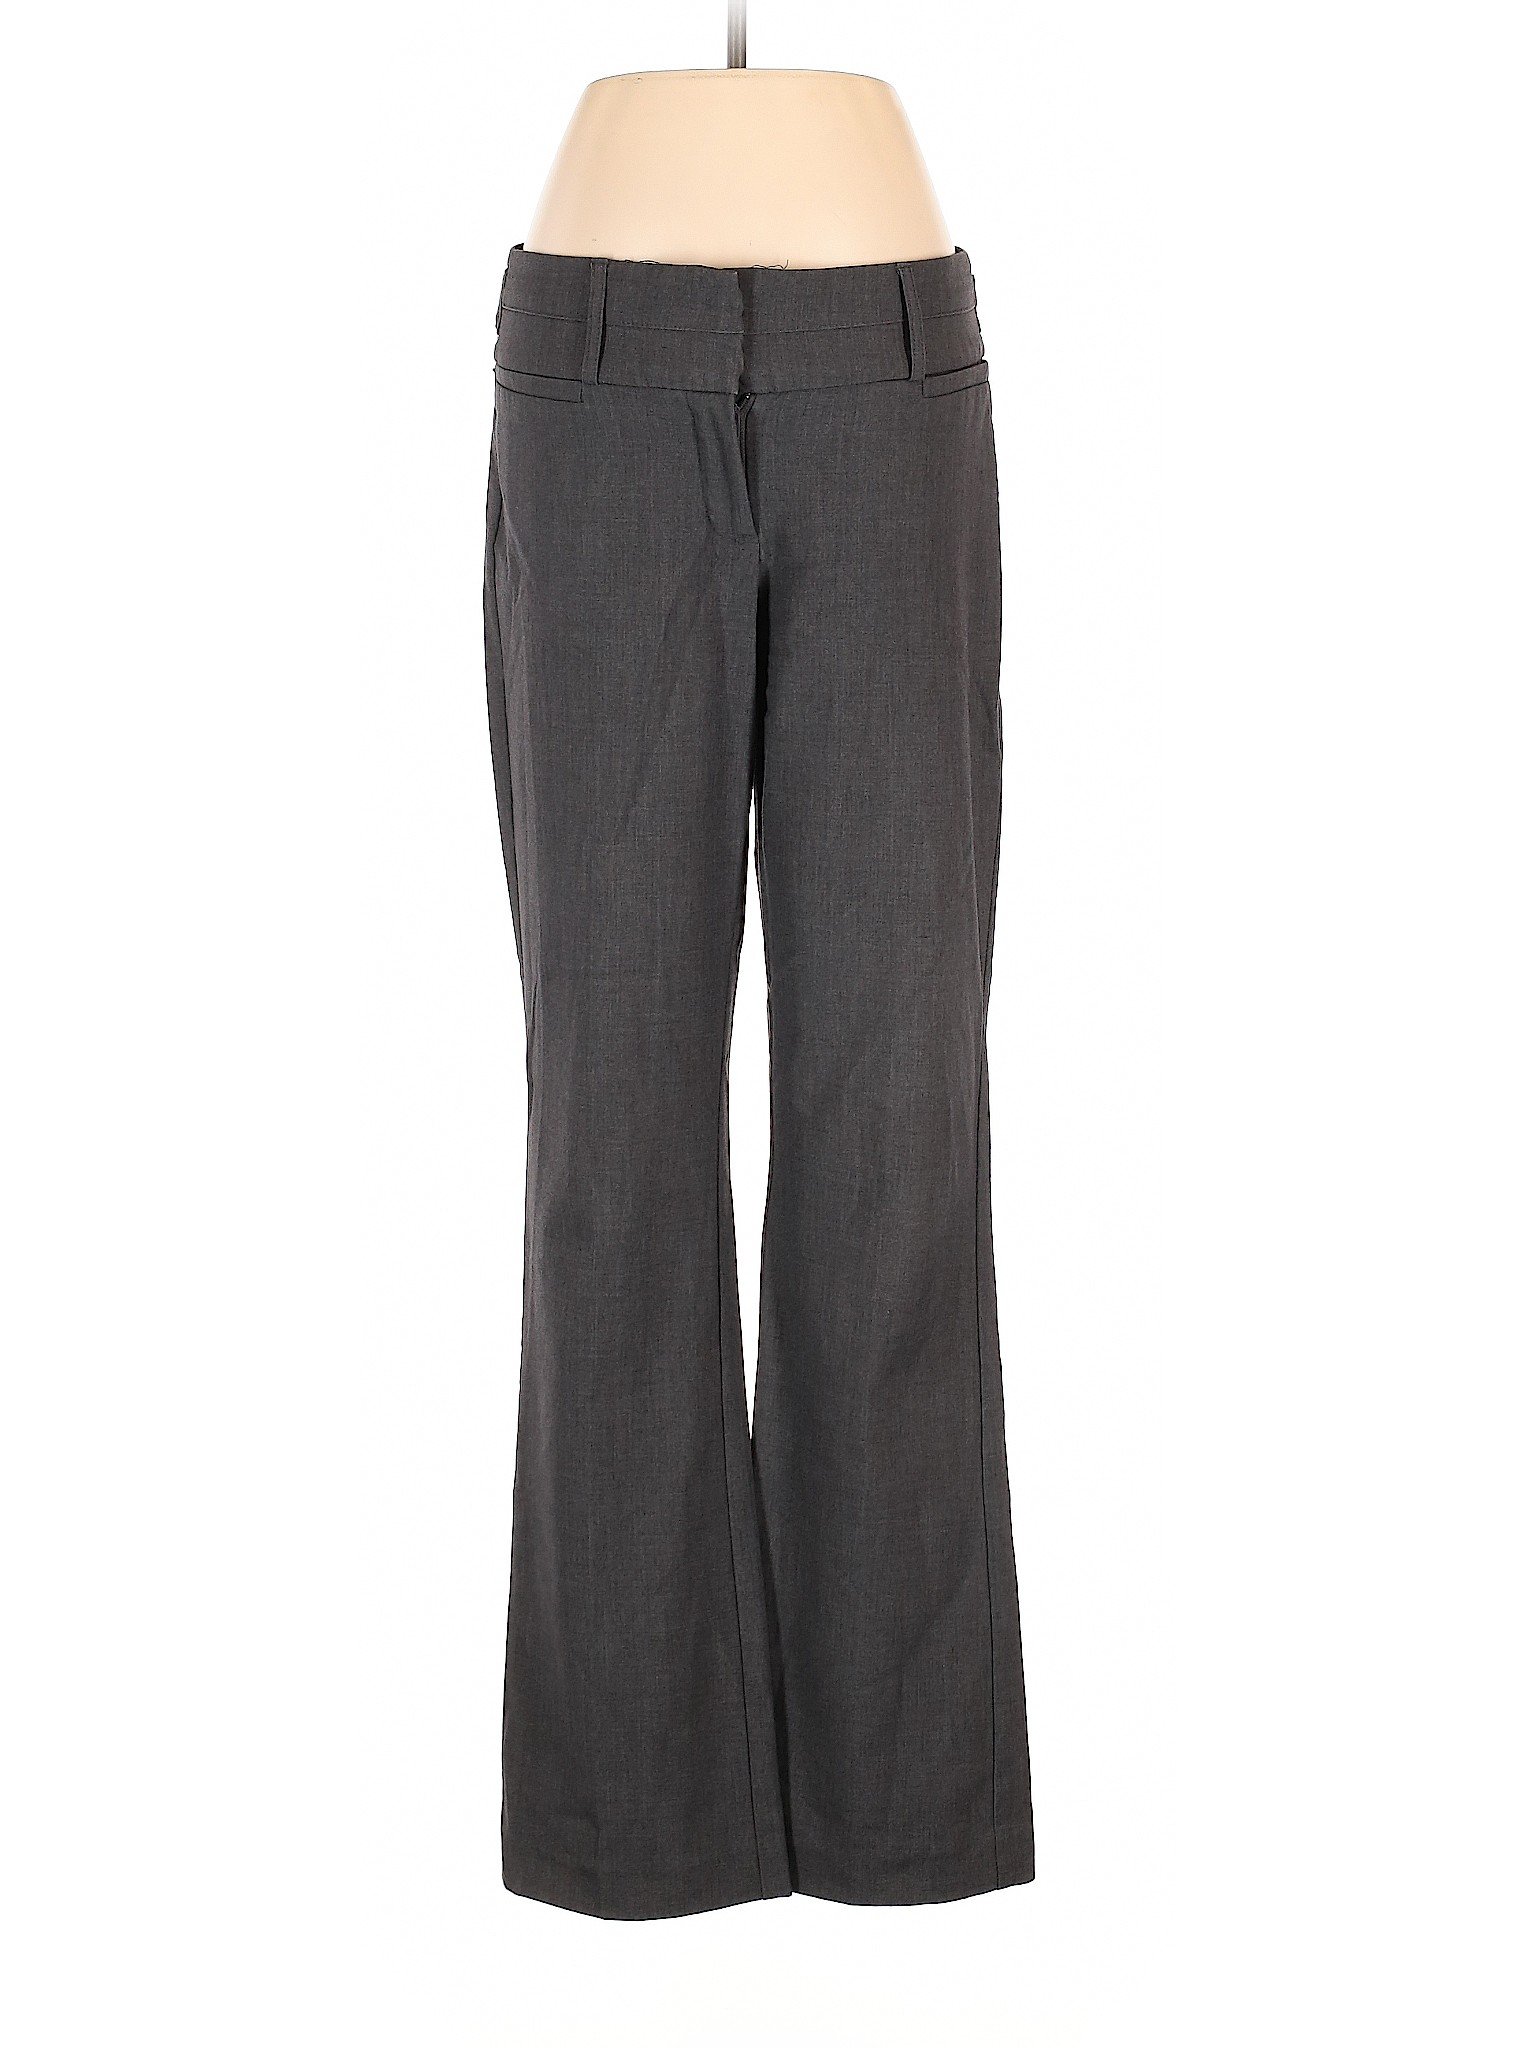 Hollywould Women Gray Dress Pants 7 | eBay